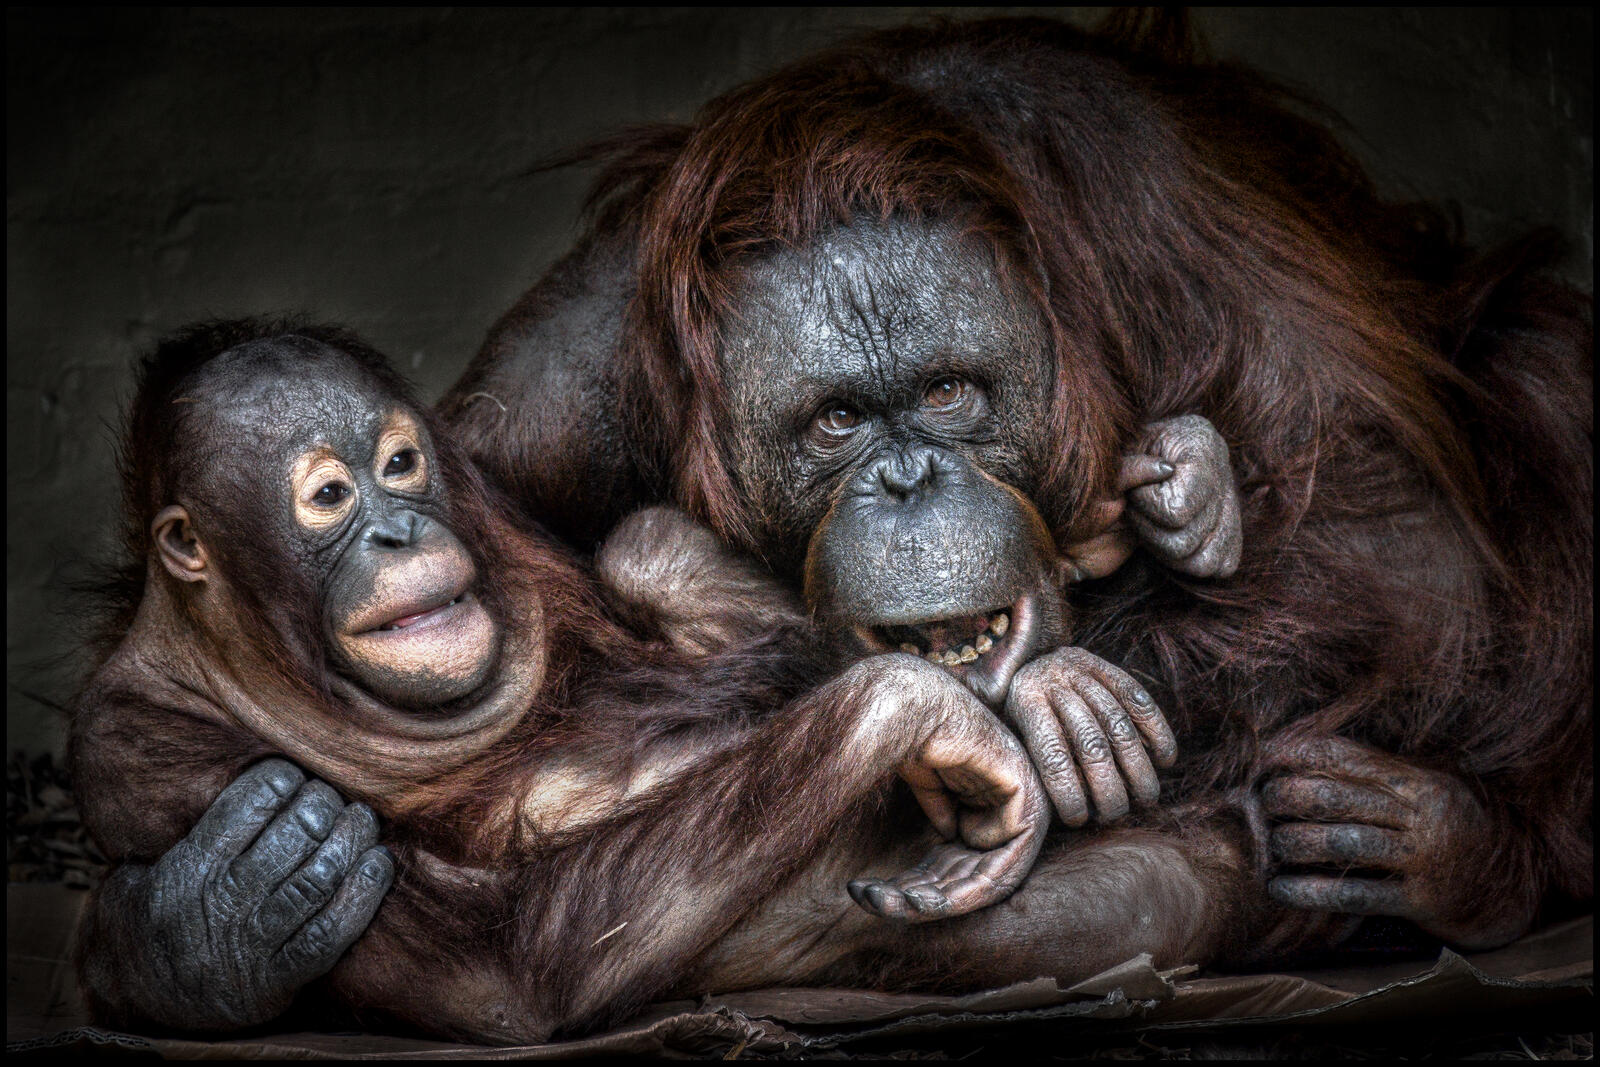 Wallpapers Orangutan orangutan primates on the desktop